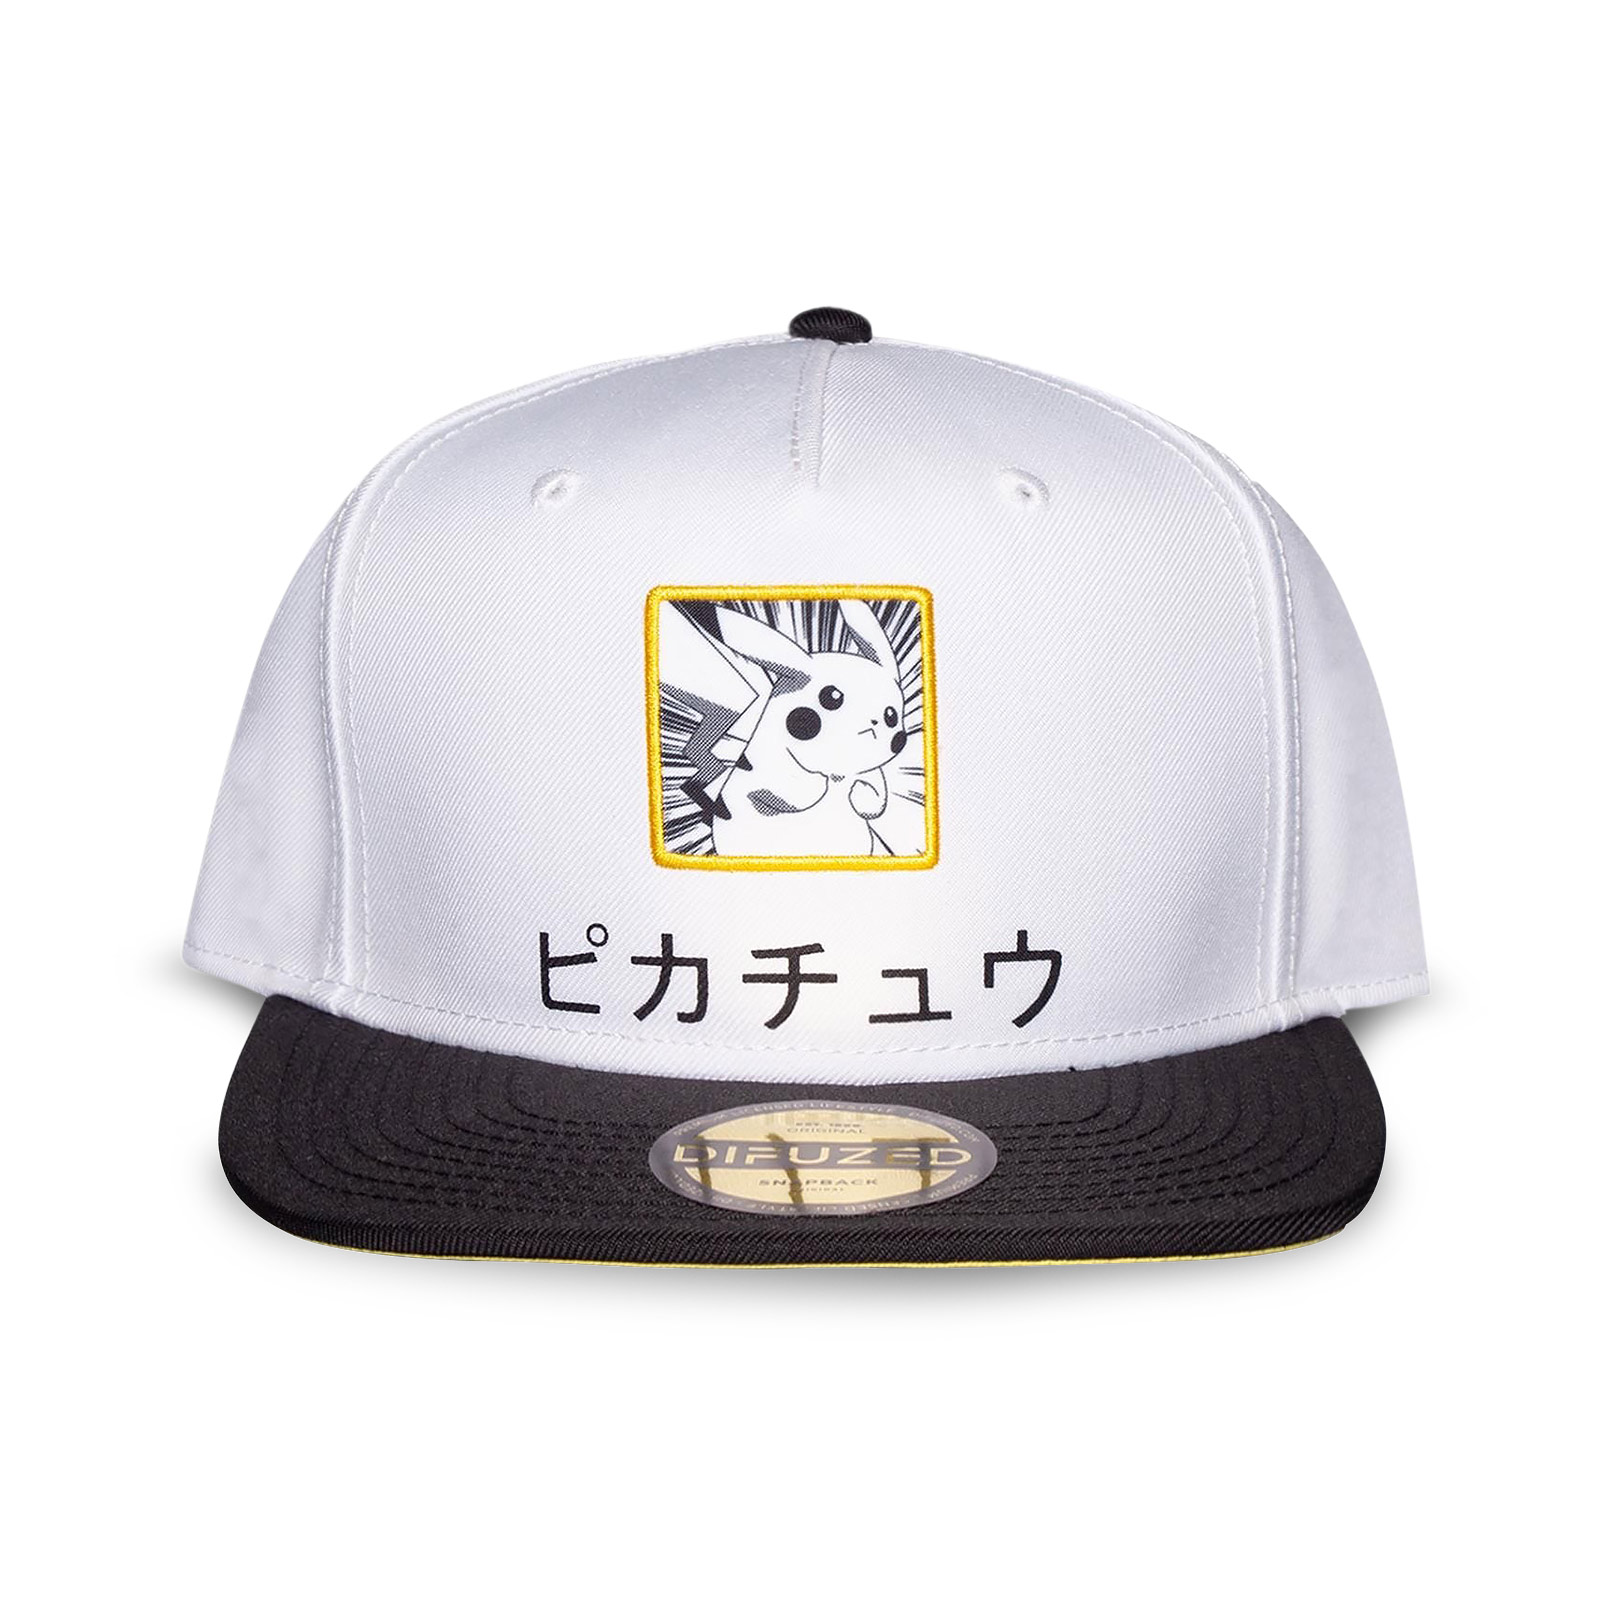 Pokemon - Pikachu Japanese Snapback Cap